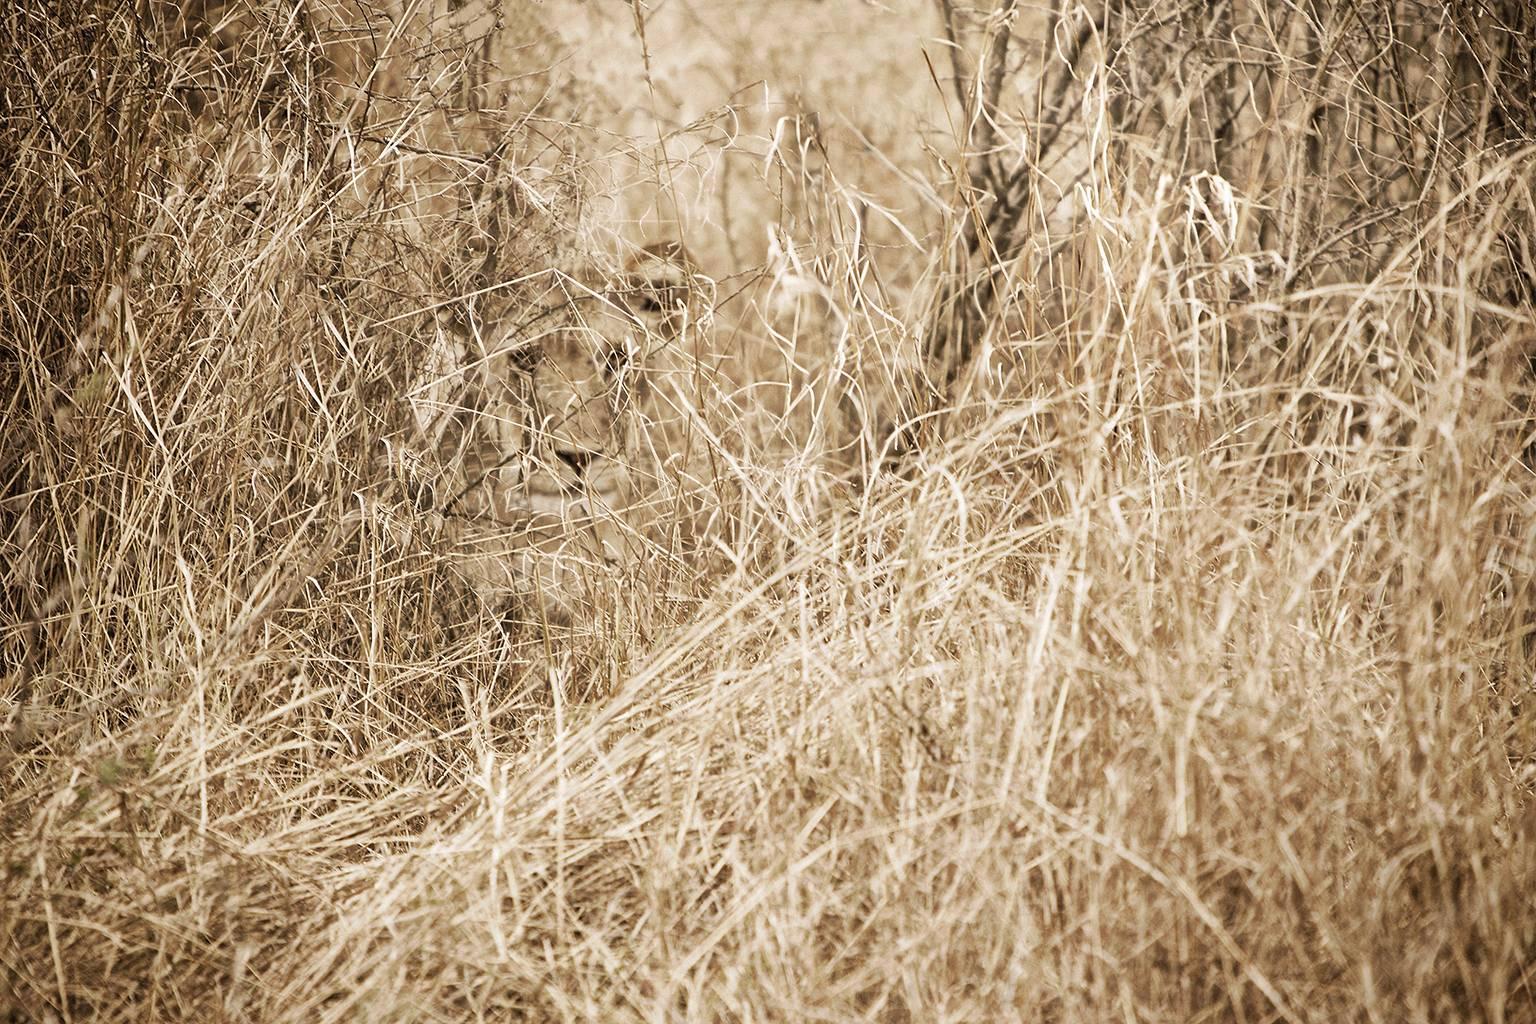 Chris Gordaneer Landscape Photograph - Lion in Grass